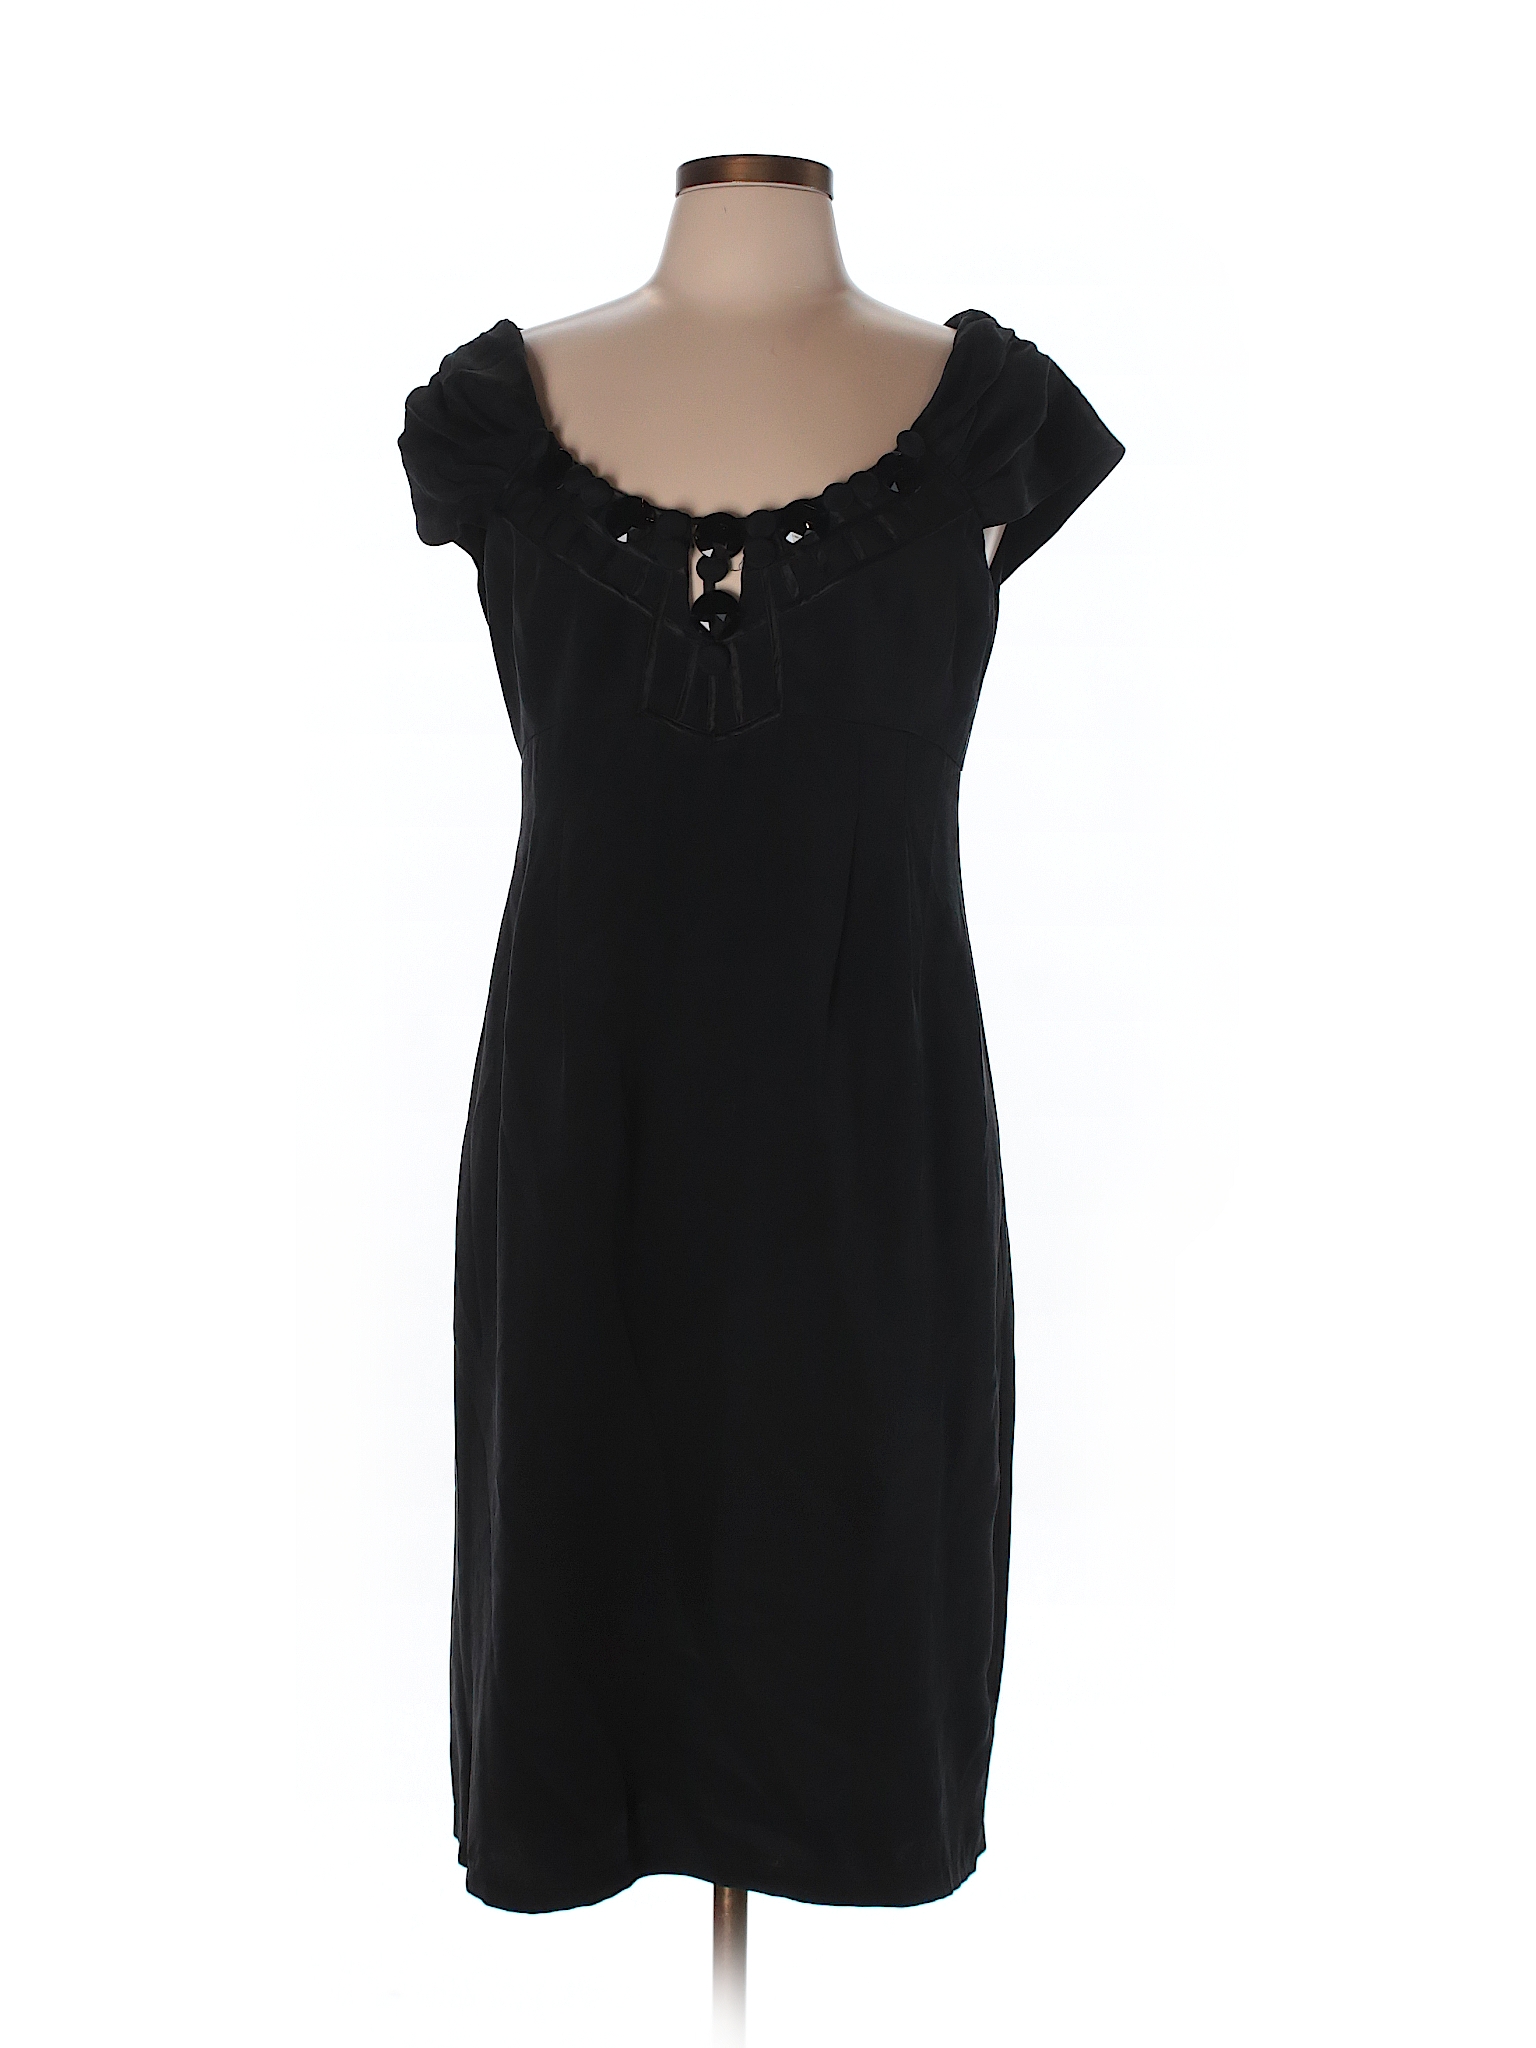 Nanette Lepore Silk Dress - 94% off only on thredUP